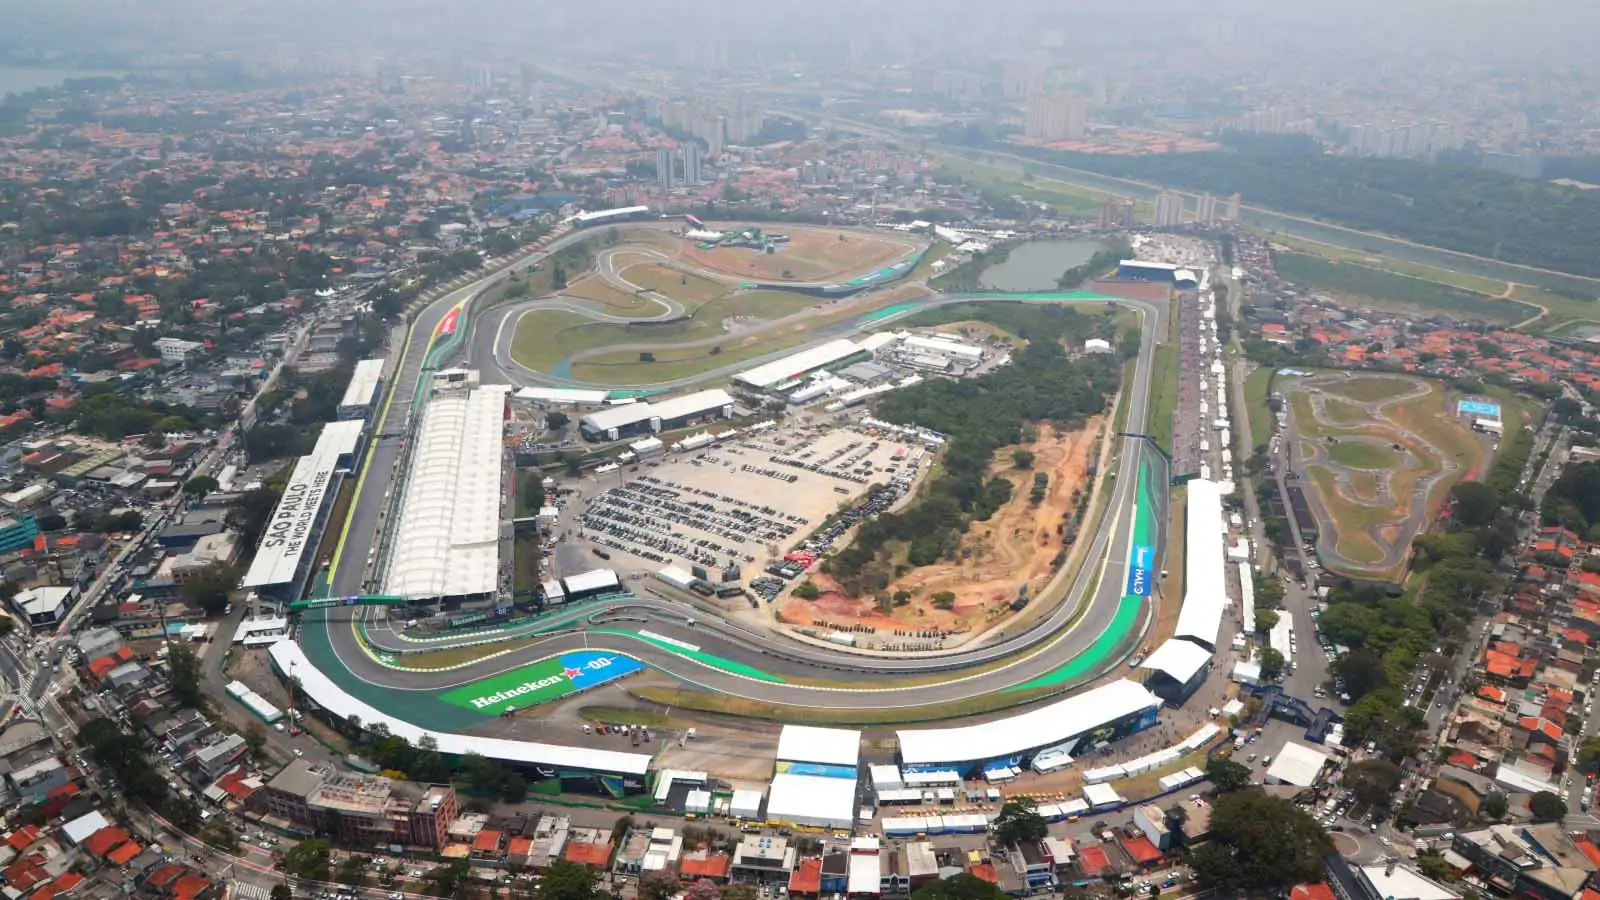 Starting grid for the 2023 F1 Brazilian Grand Prix